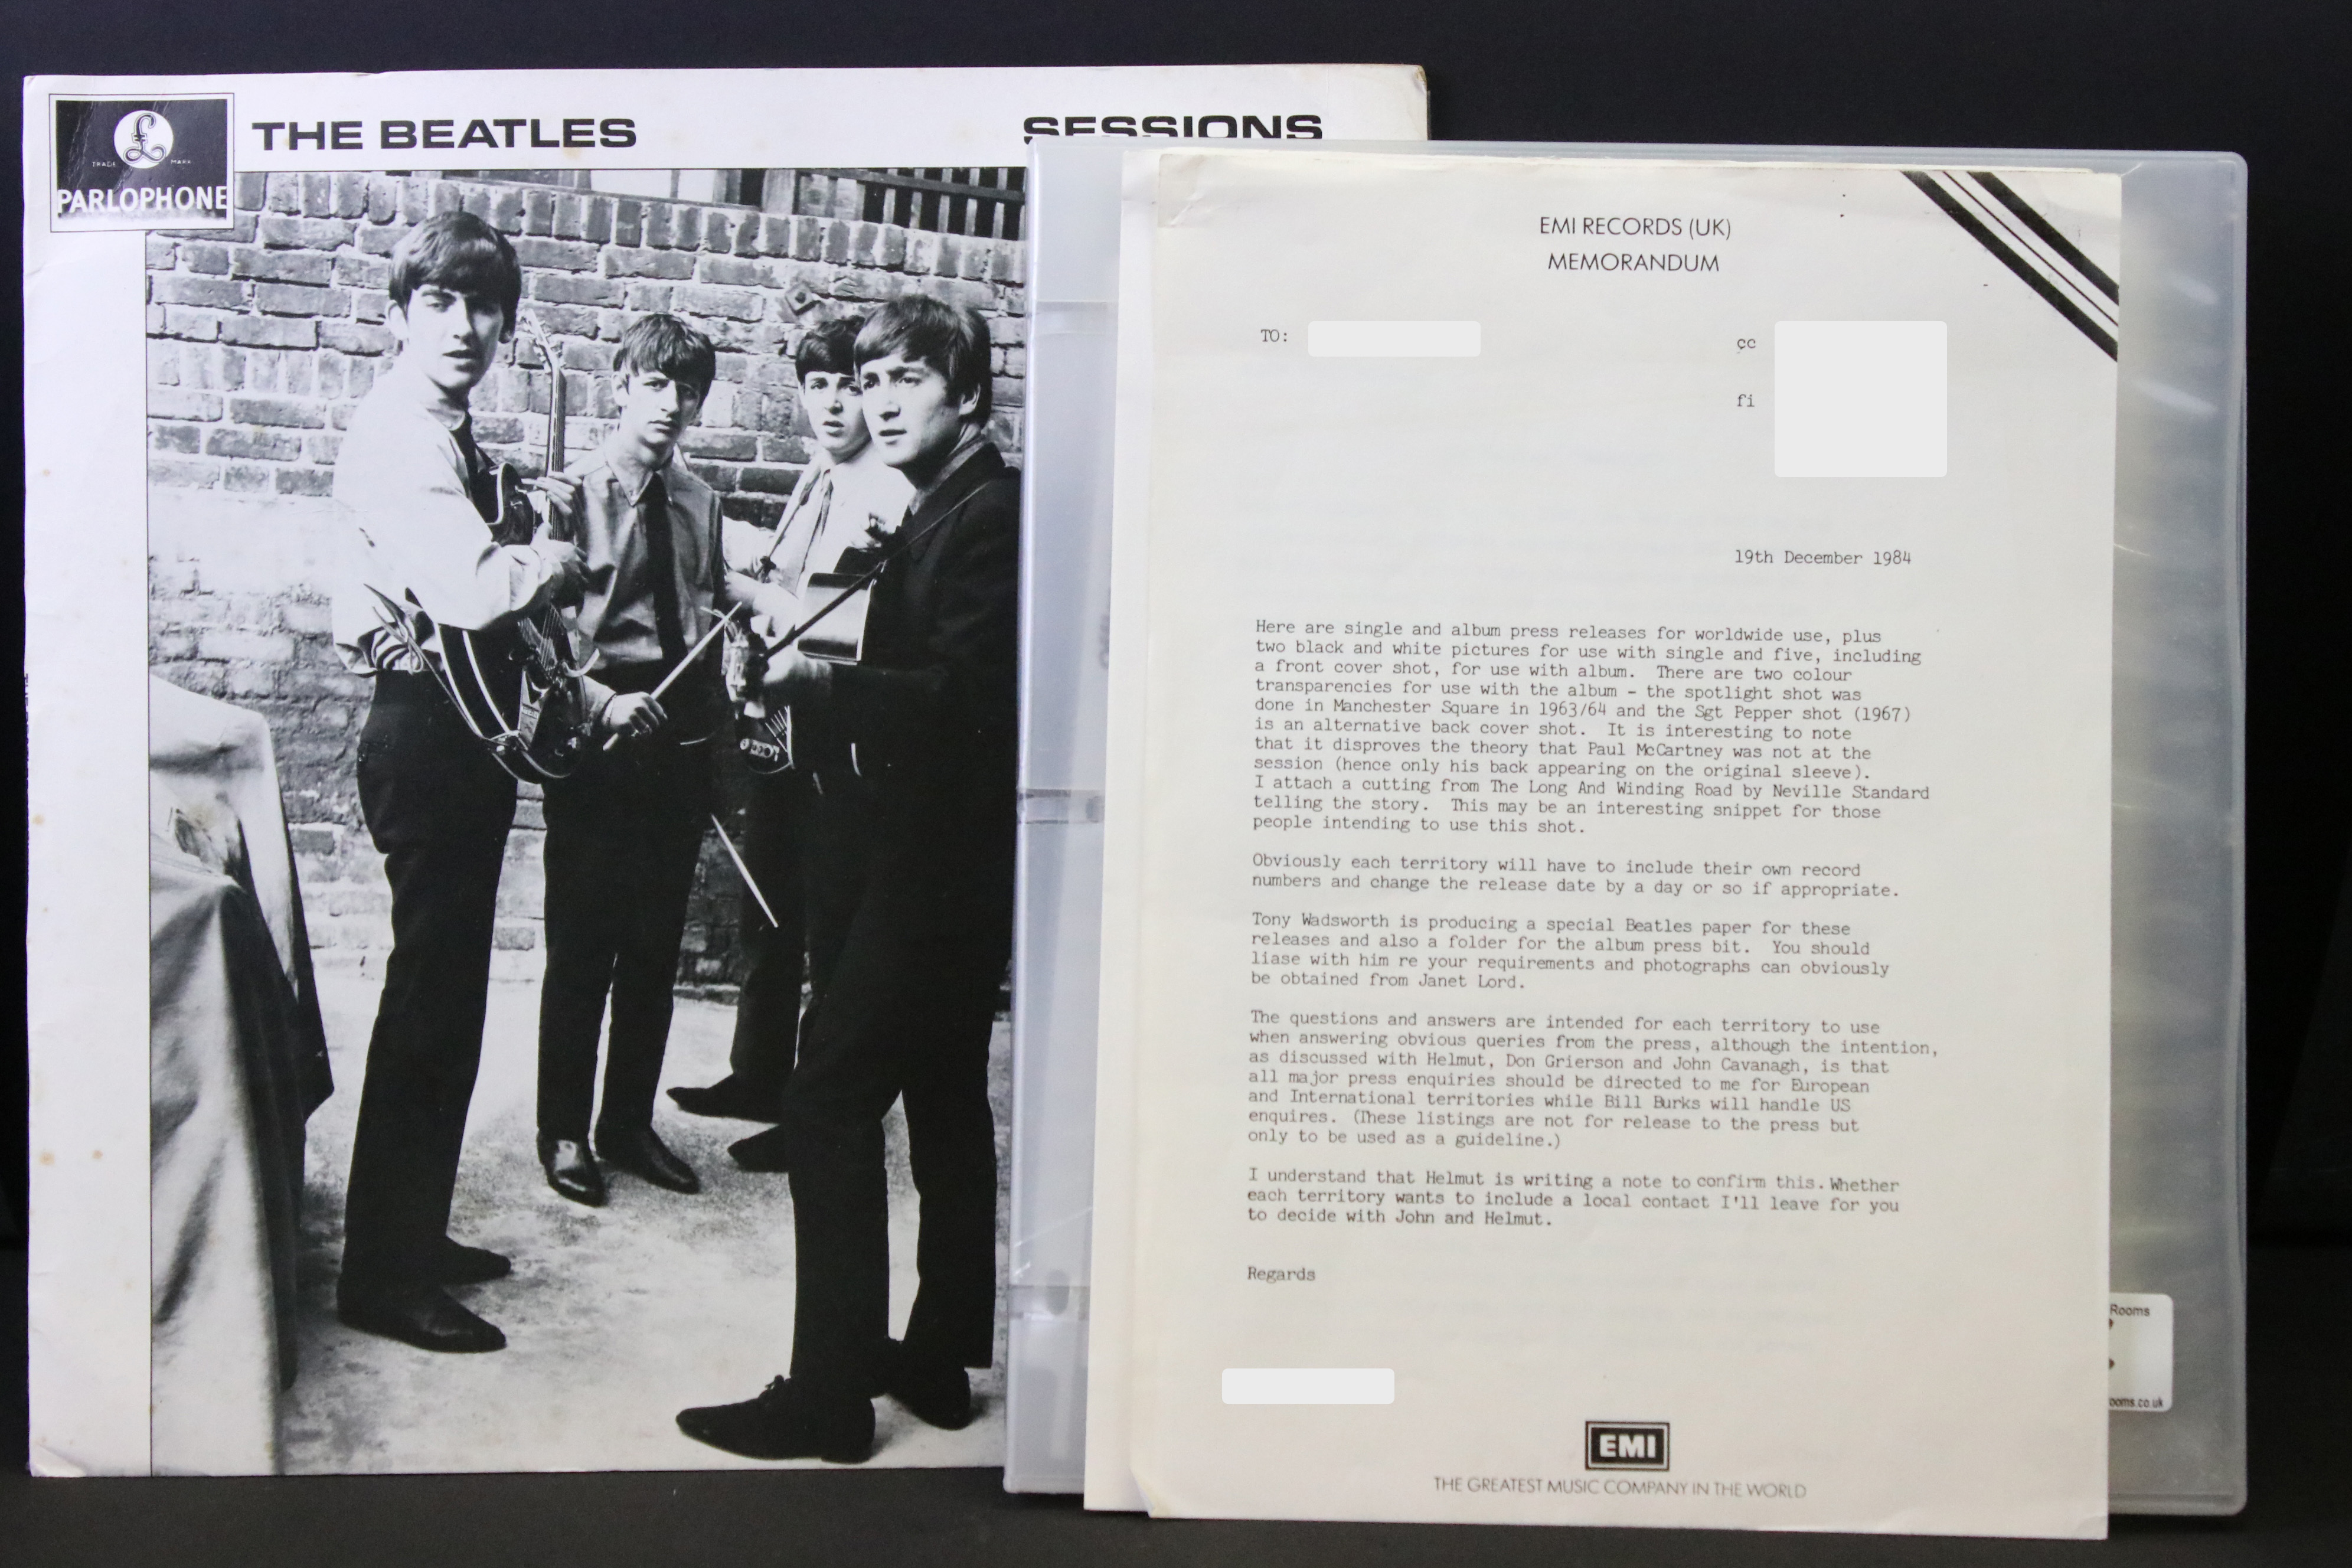 Beatles Sessions front cover with internal EMI memorandum